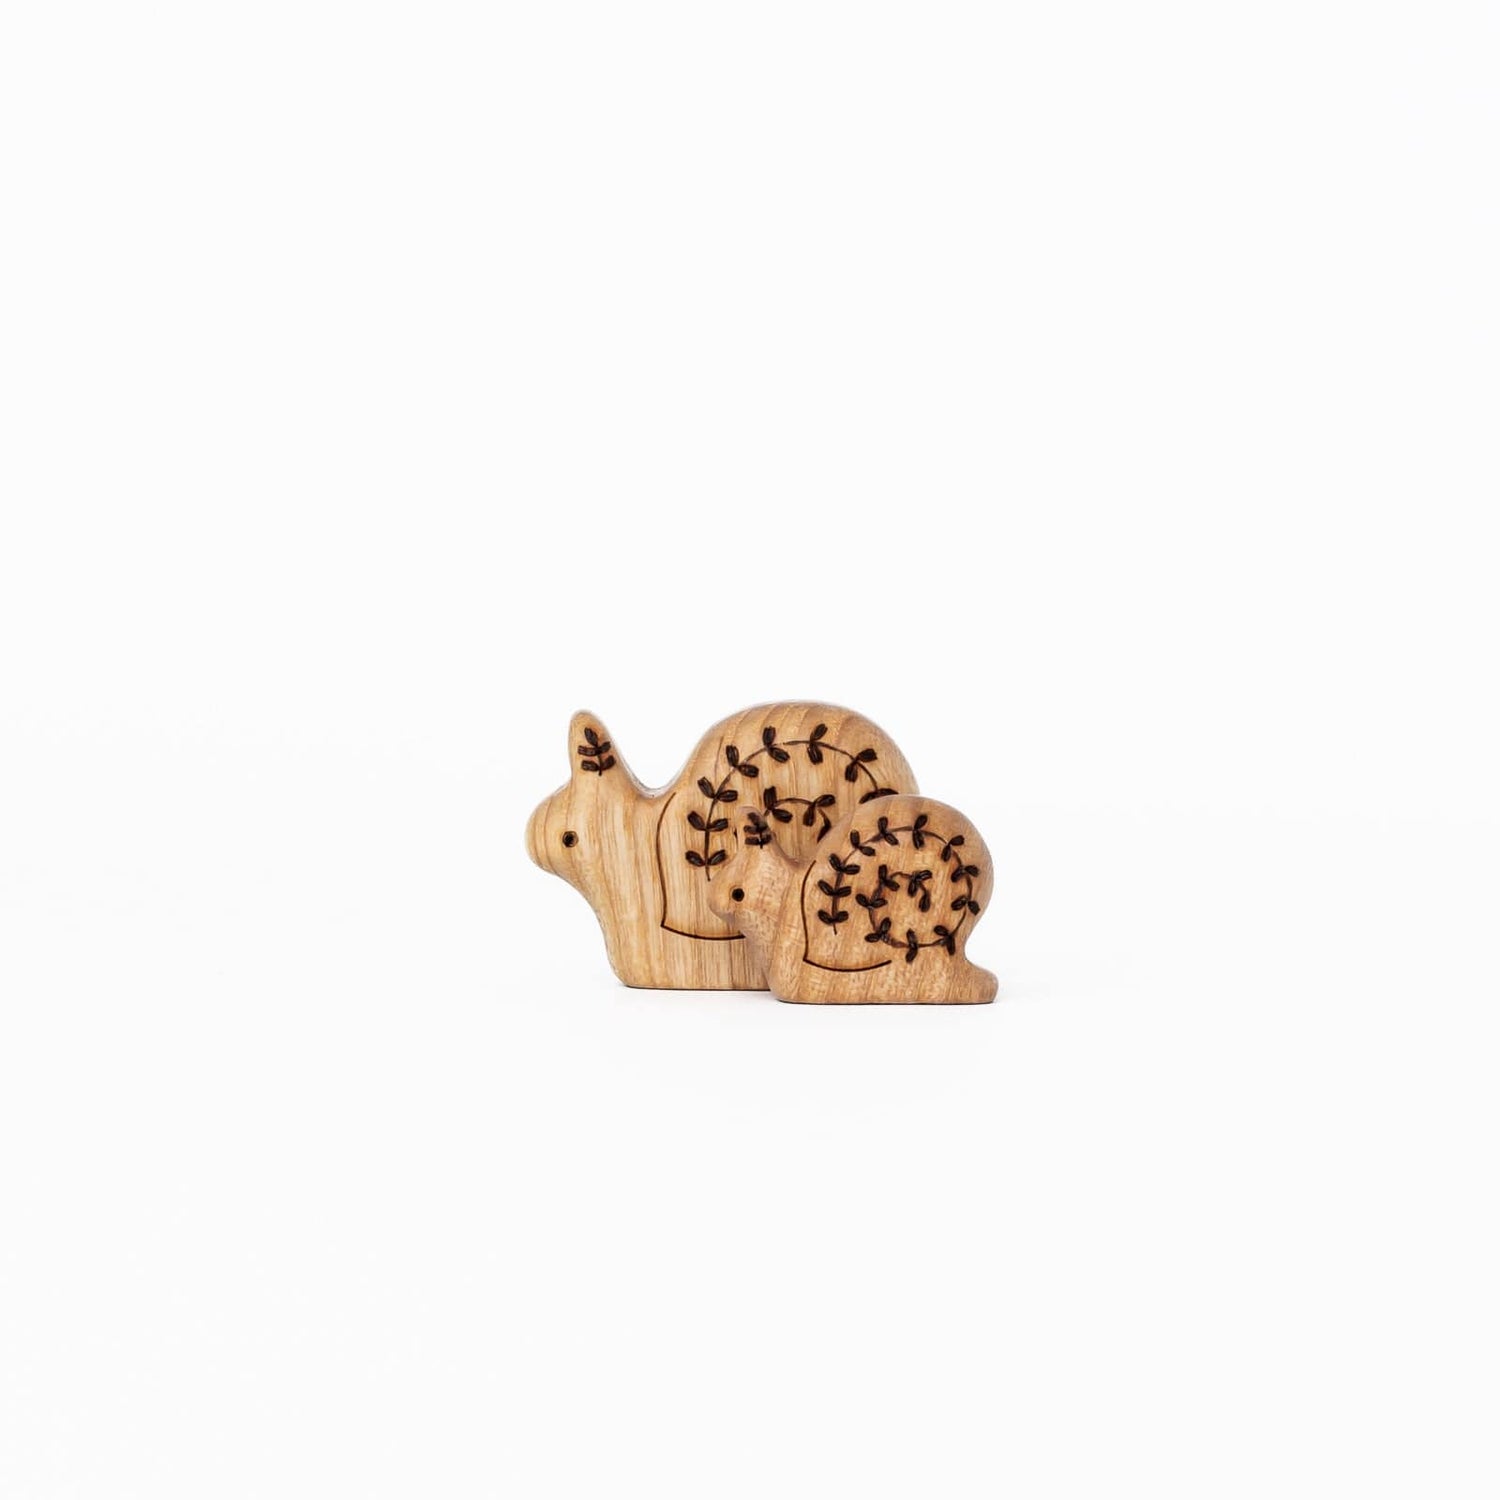 Tiny Fox Hole Wooden Animals Handmade Wooden Snail Toy (Set of 2)